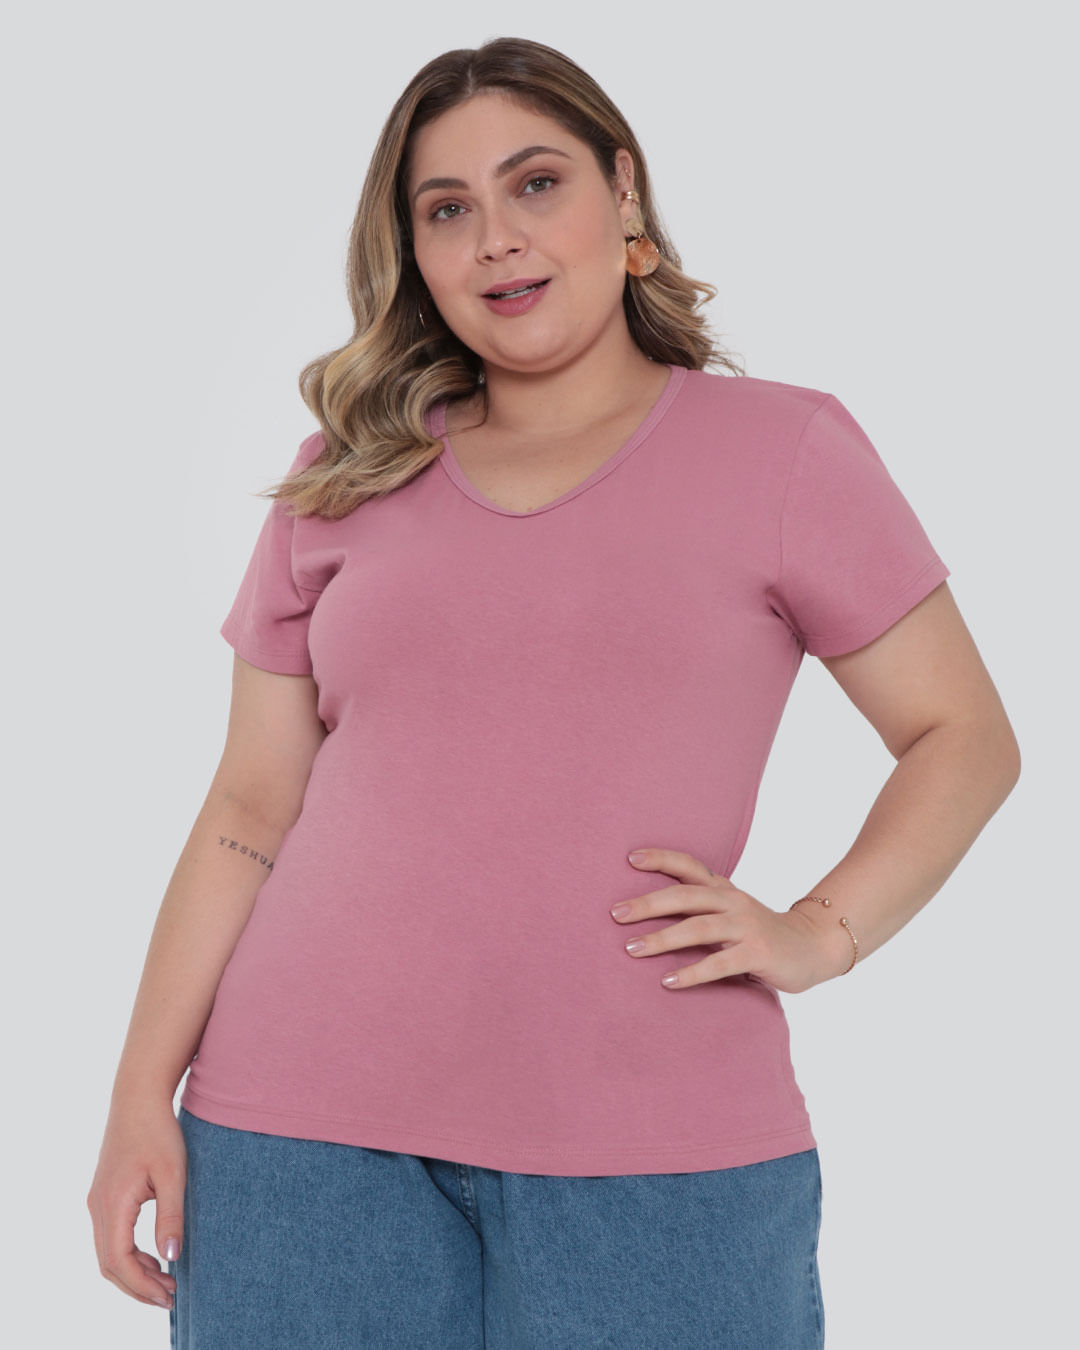 Blusa Plus Size Feminina Básica Rosa Médio